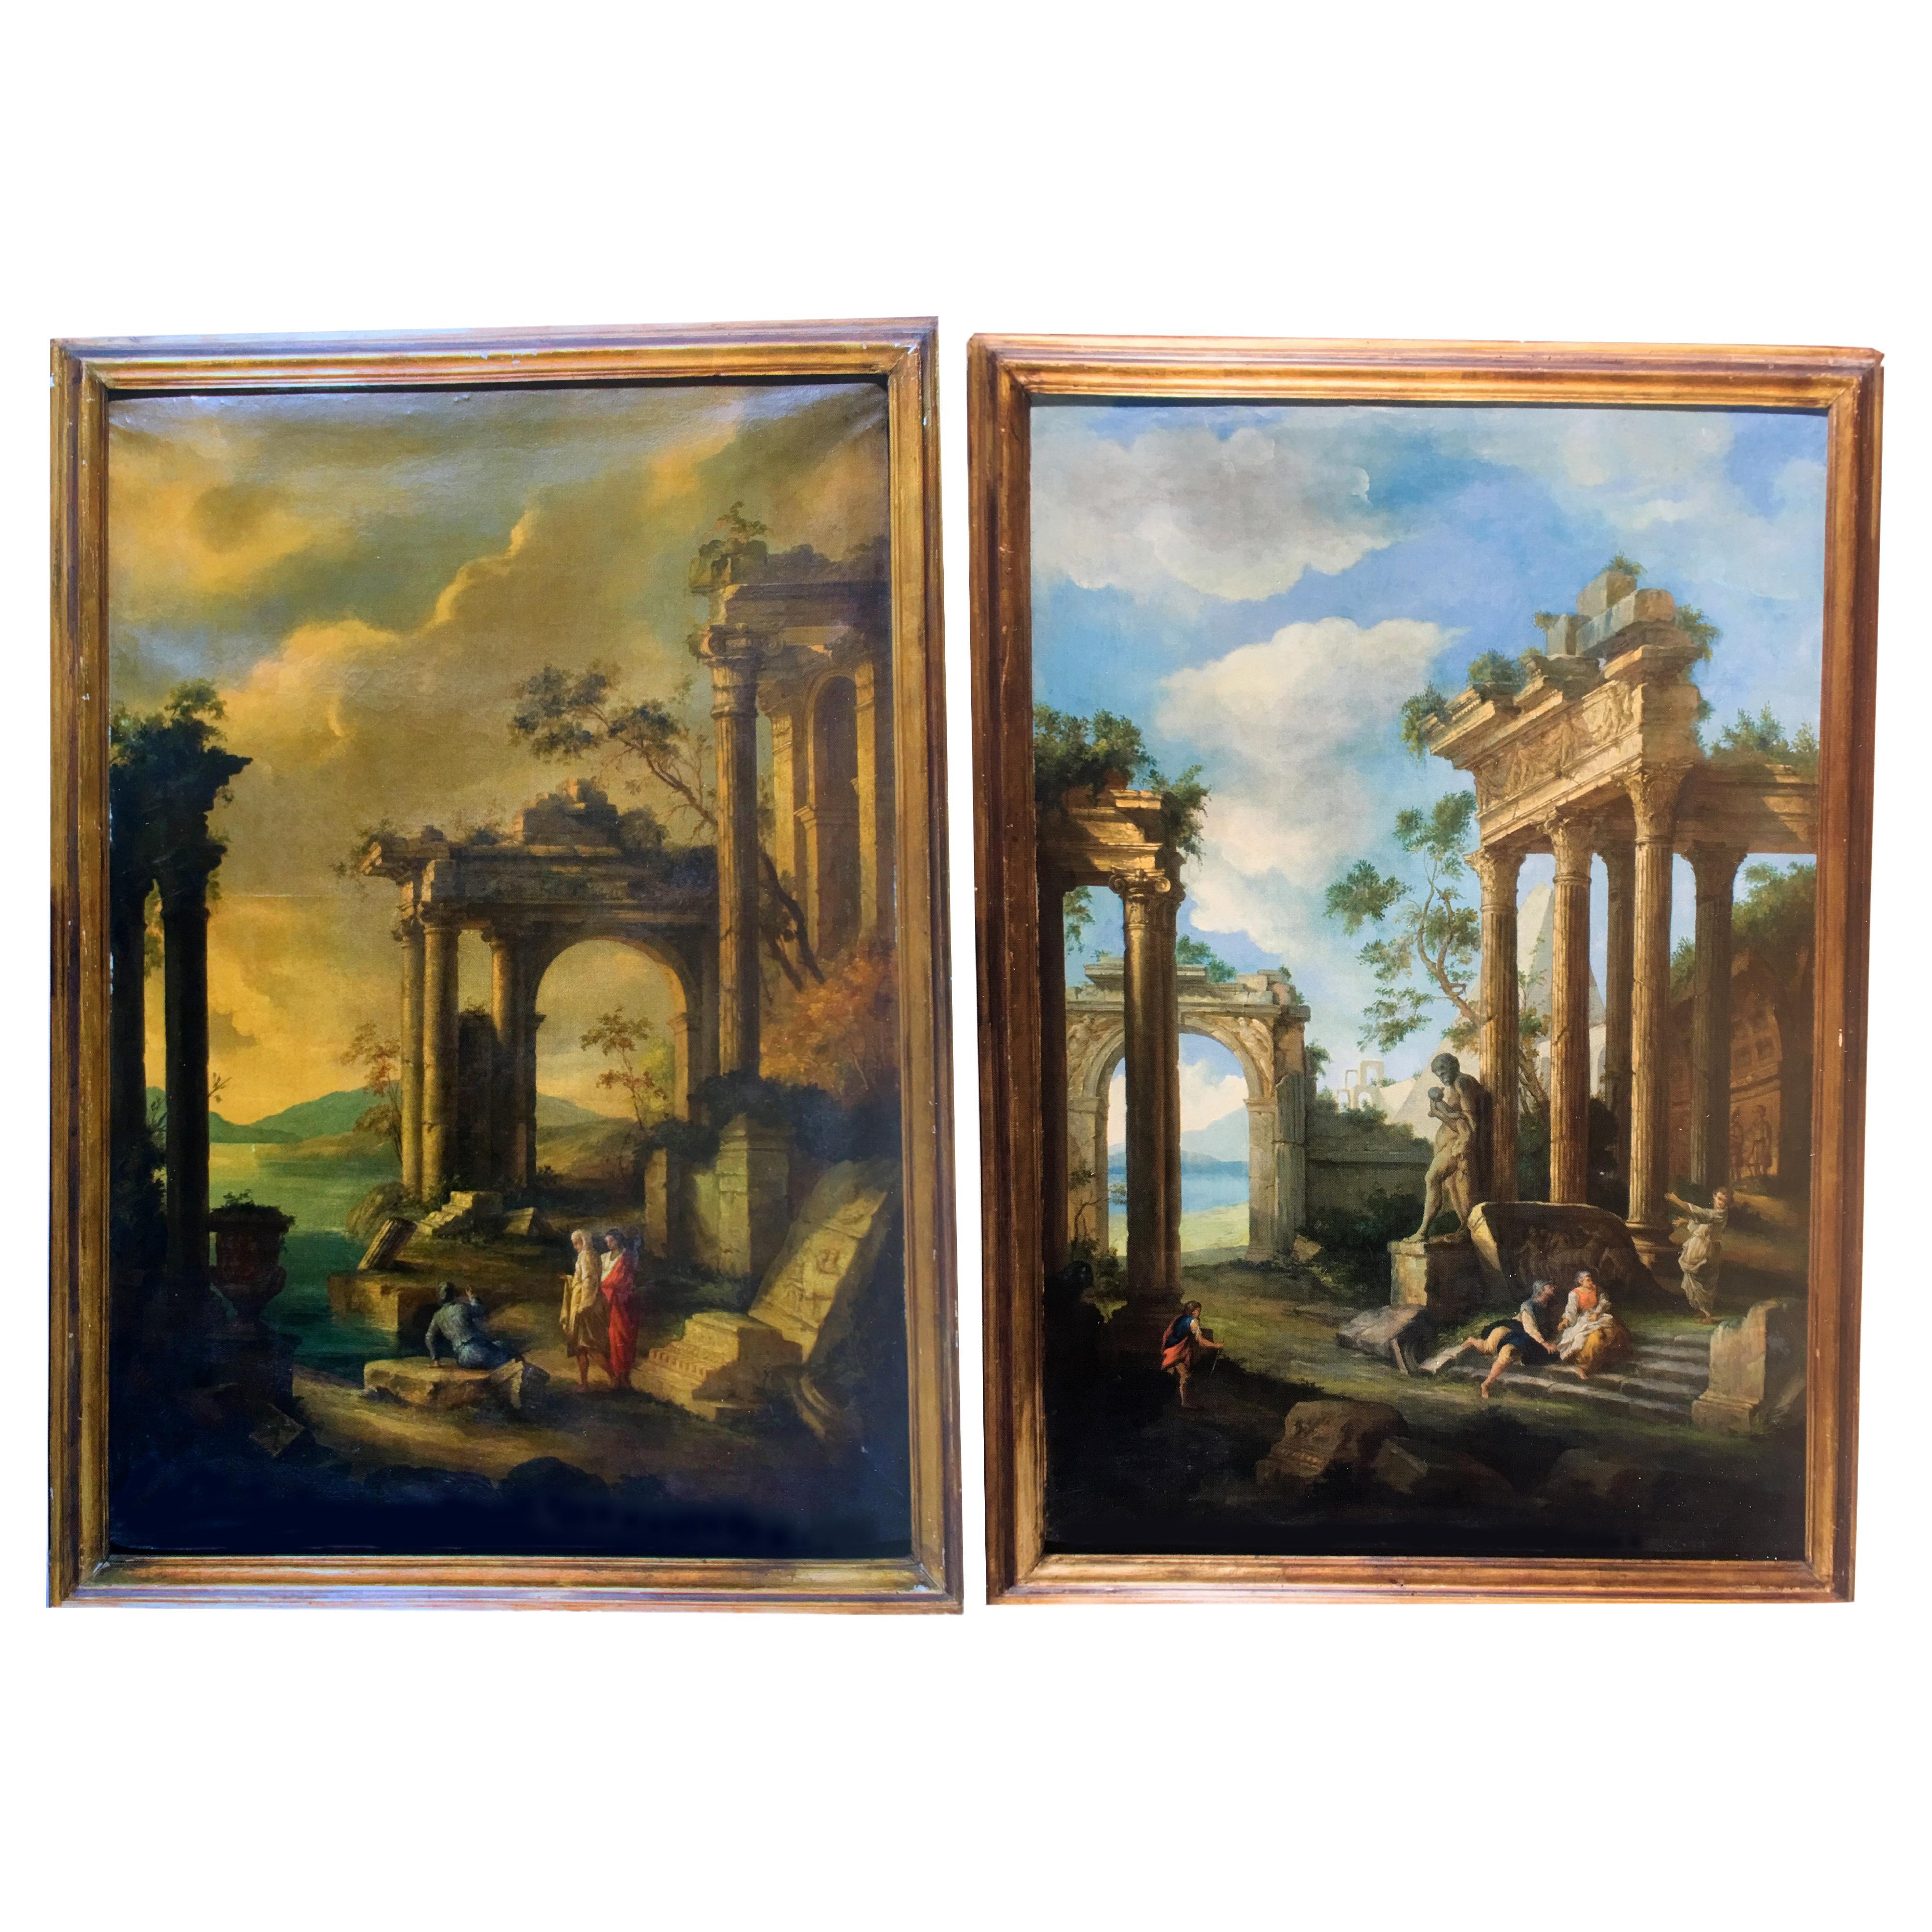 Peintre italien de 1700 « Capriccio with classical ruins and figures » (Capriccio avec ruines et personnages classiques)